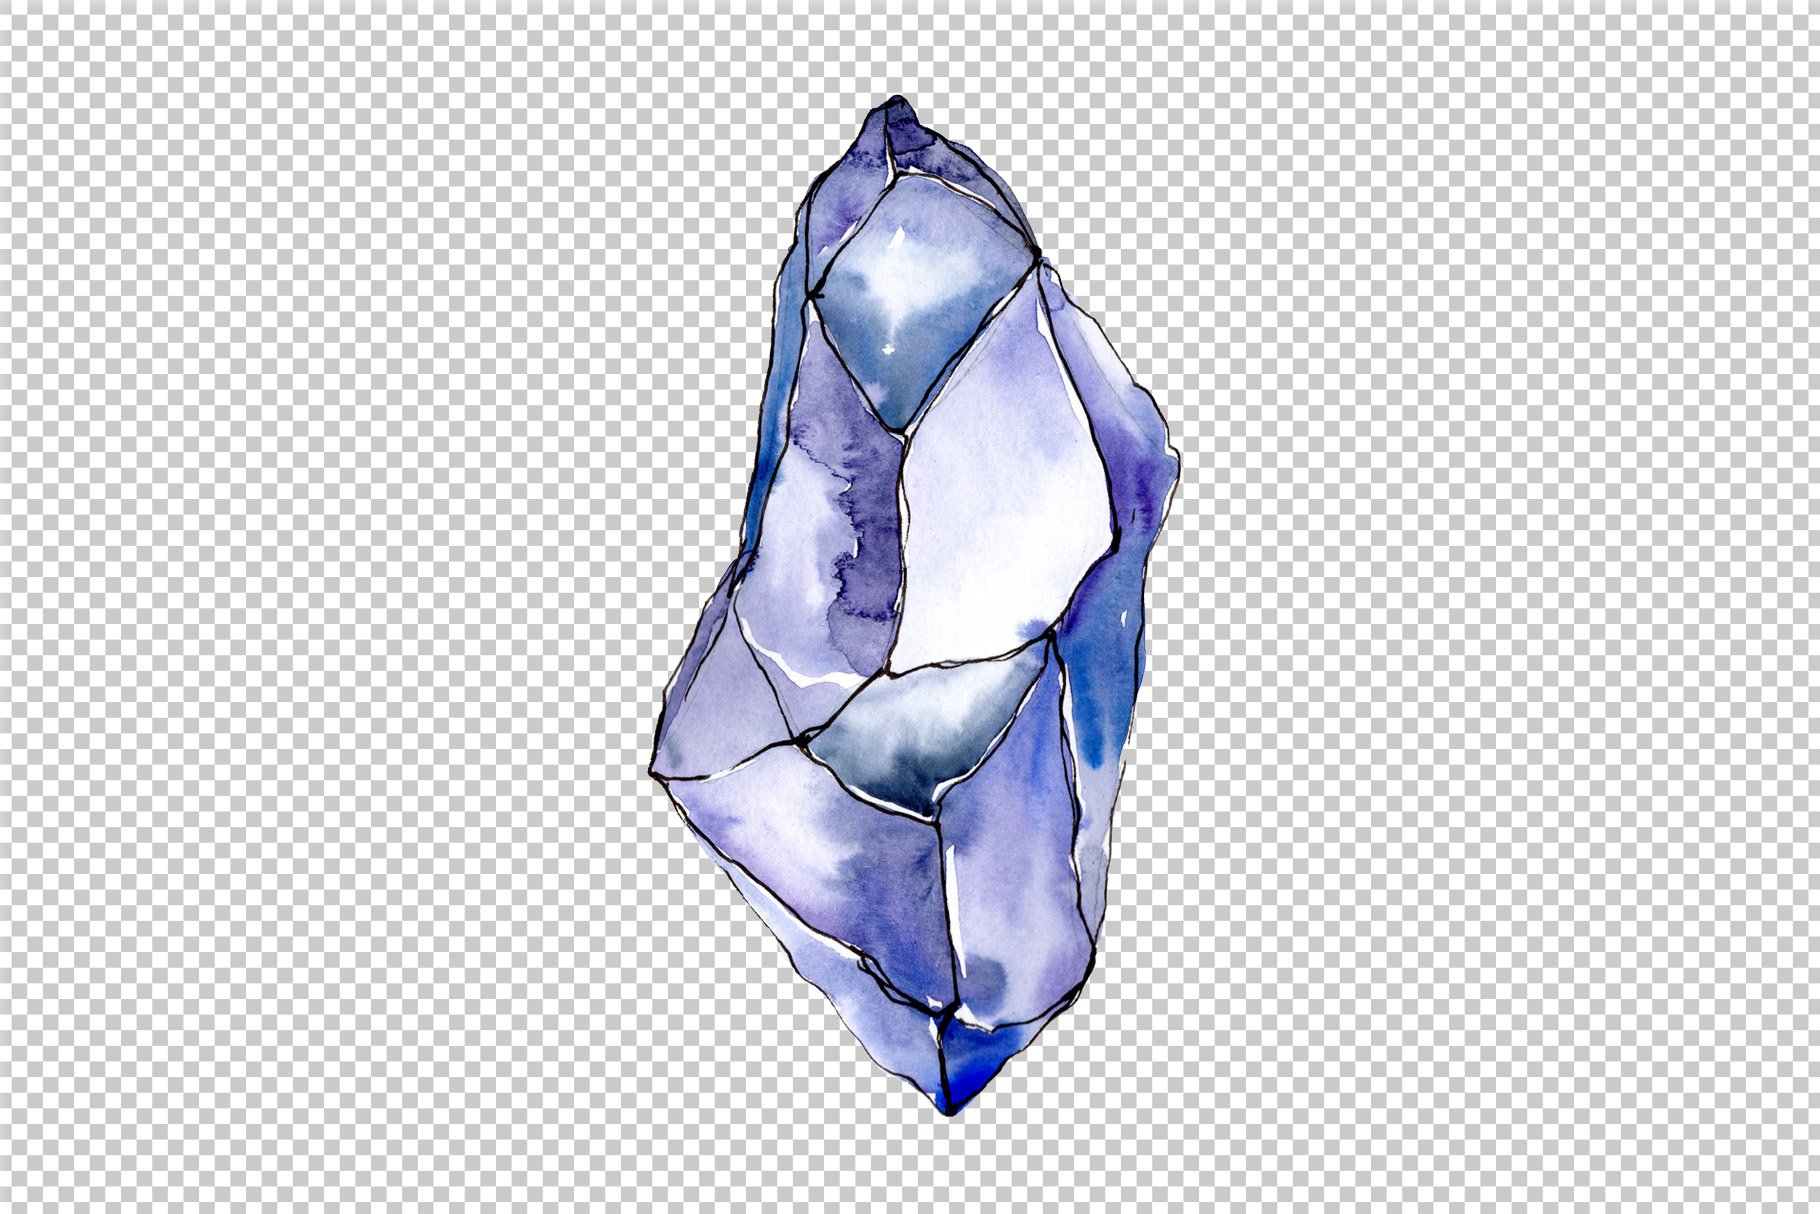 Aquarelle crystals mineral PNG set preview image.